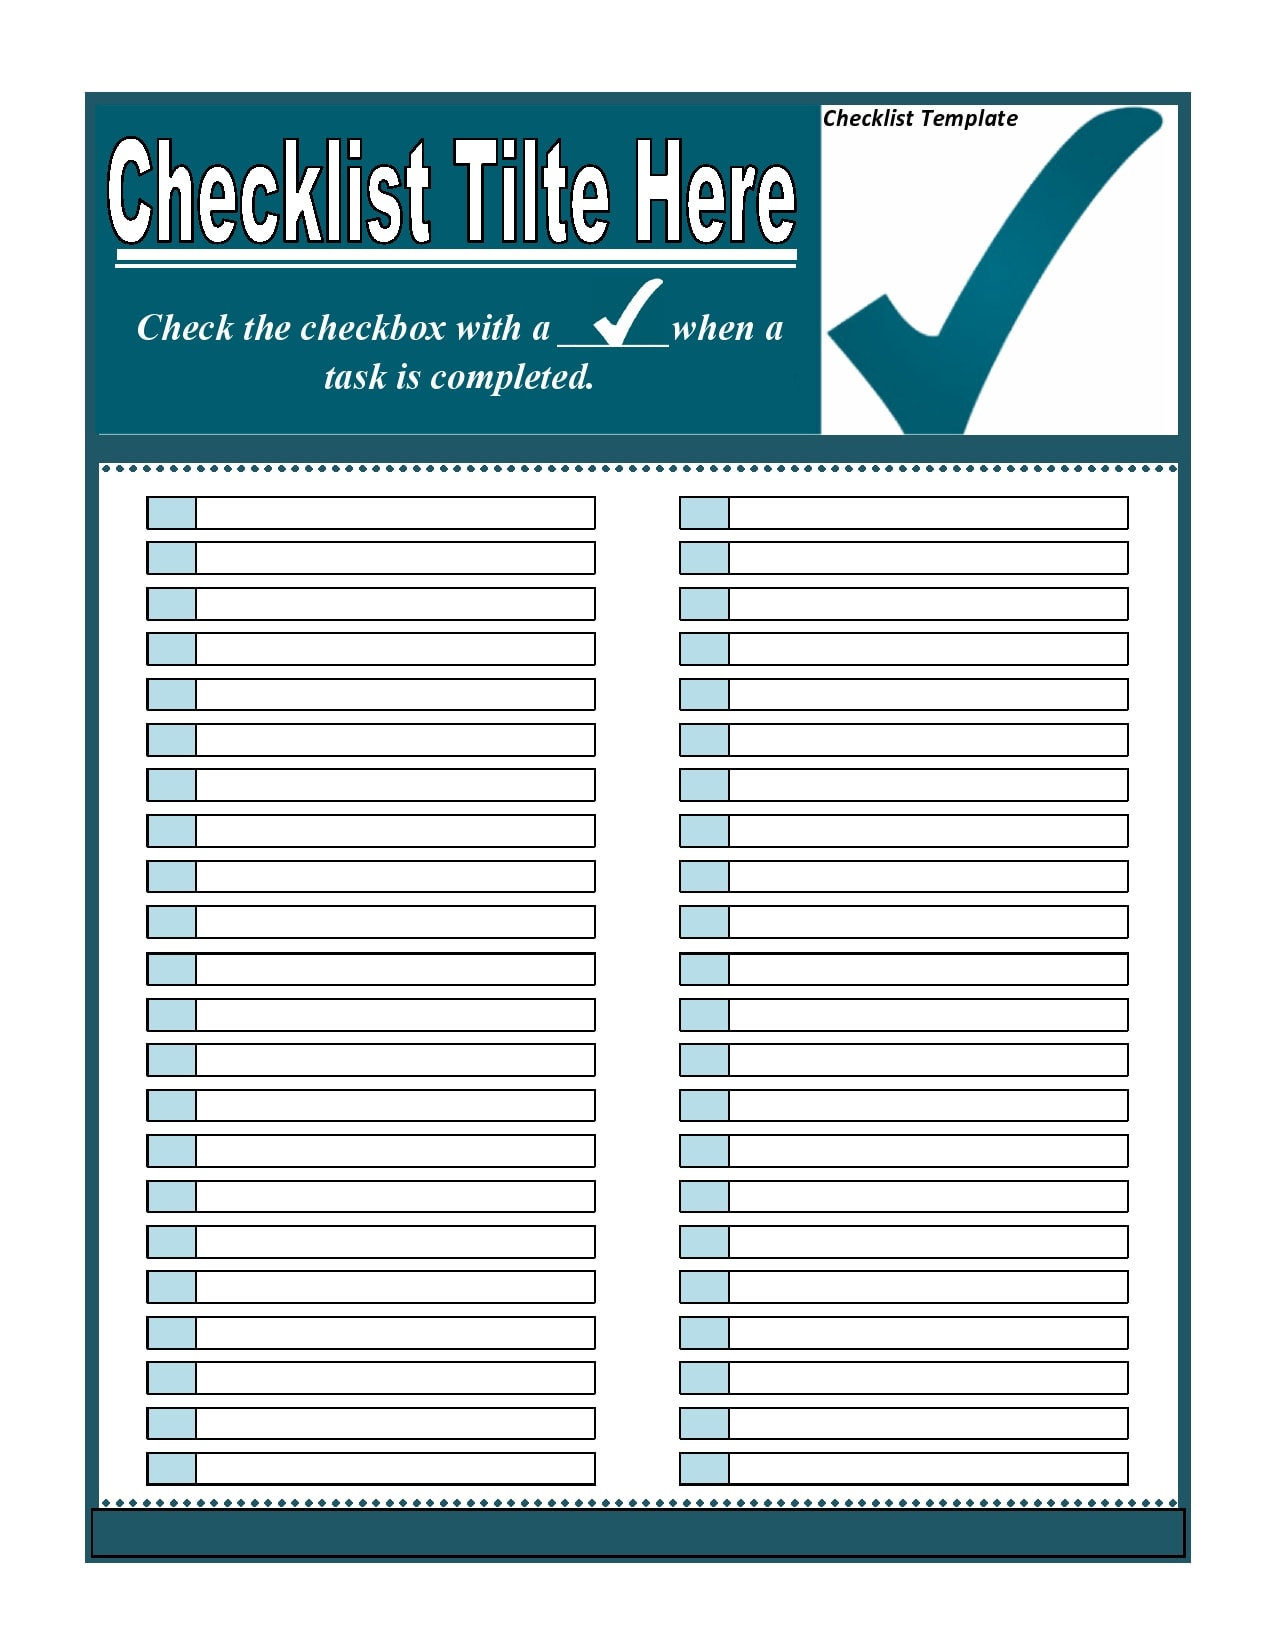 10 Free Checklist Templates (Word, Excel) - PrintableTemplates Within Month End Checklist Template Excel Inside Month End Checklist Template Excel